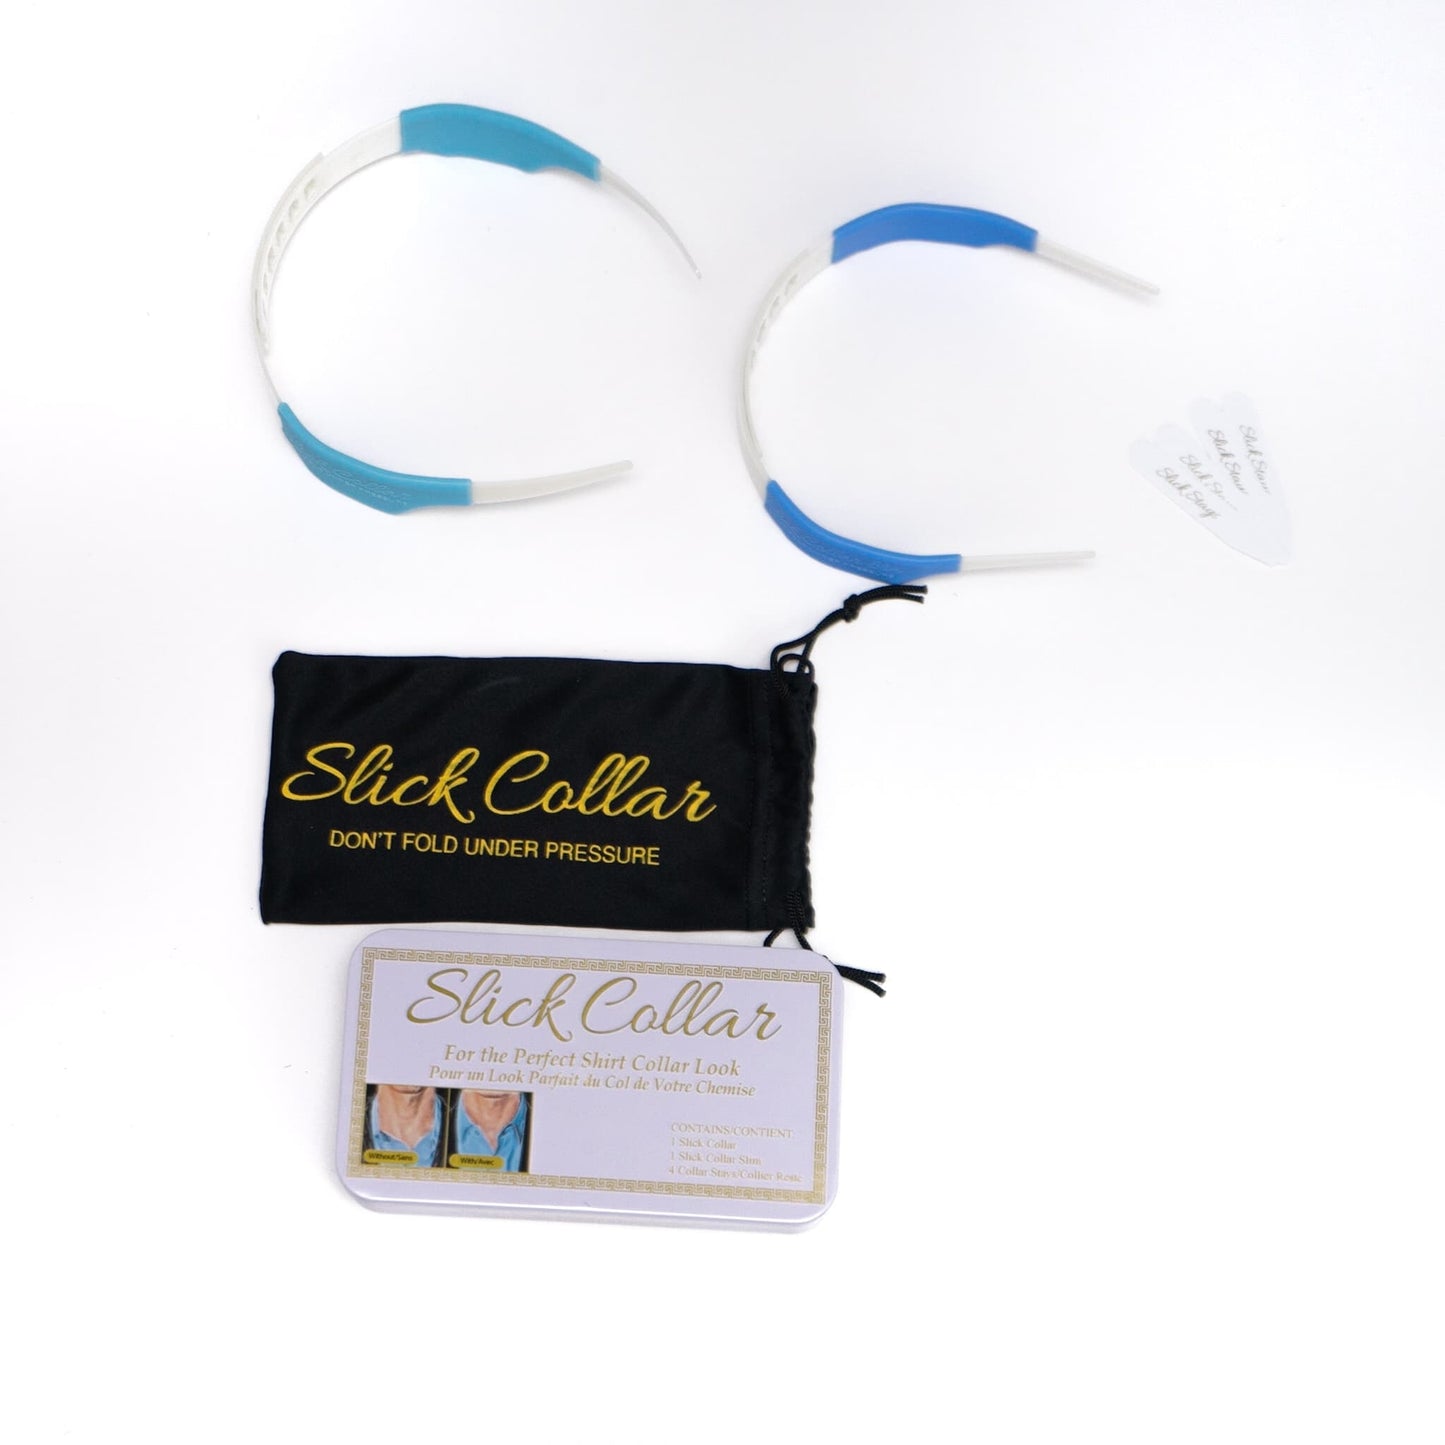 Slick Collar Kit - (1) Slim, (1) Original, & (2) Collar Stays